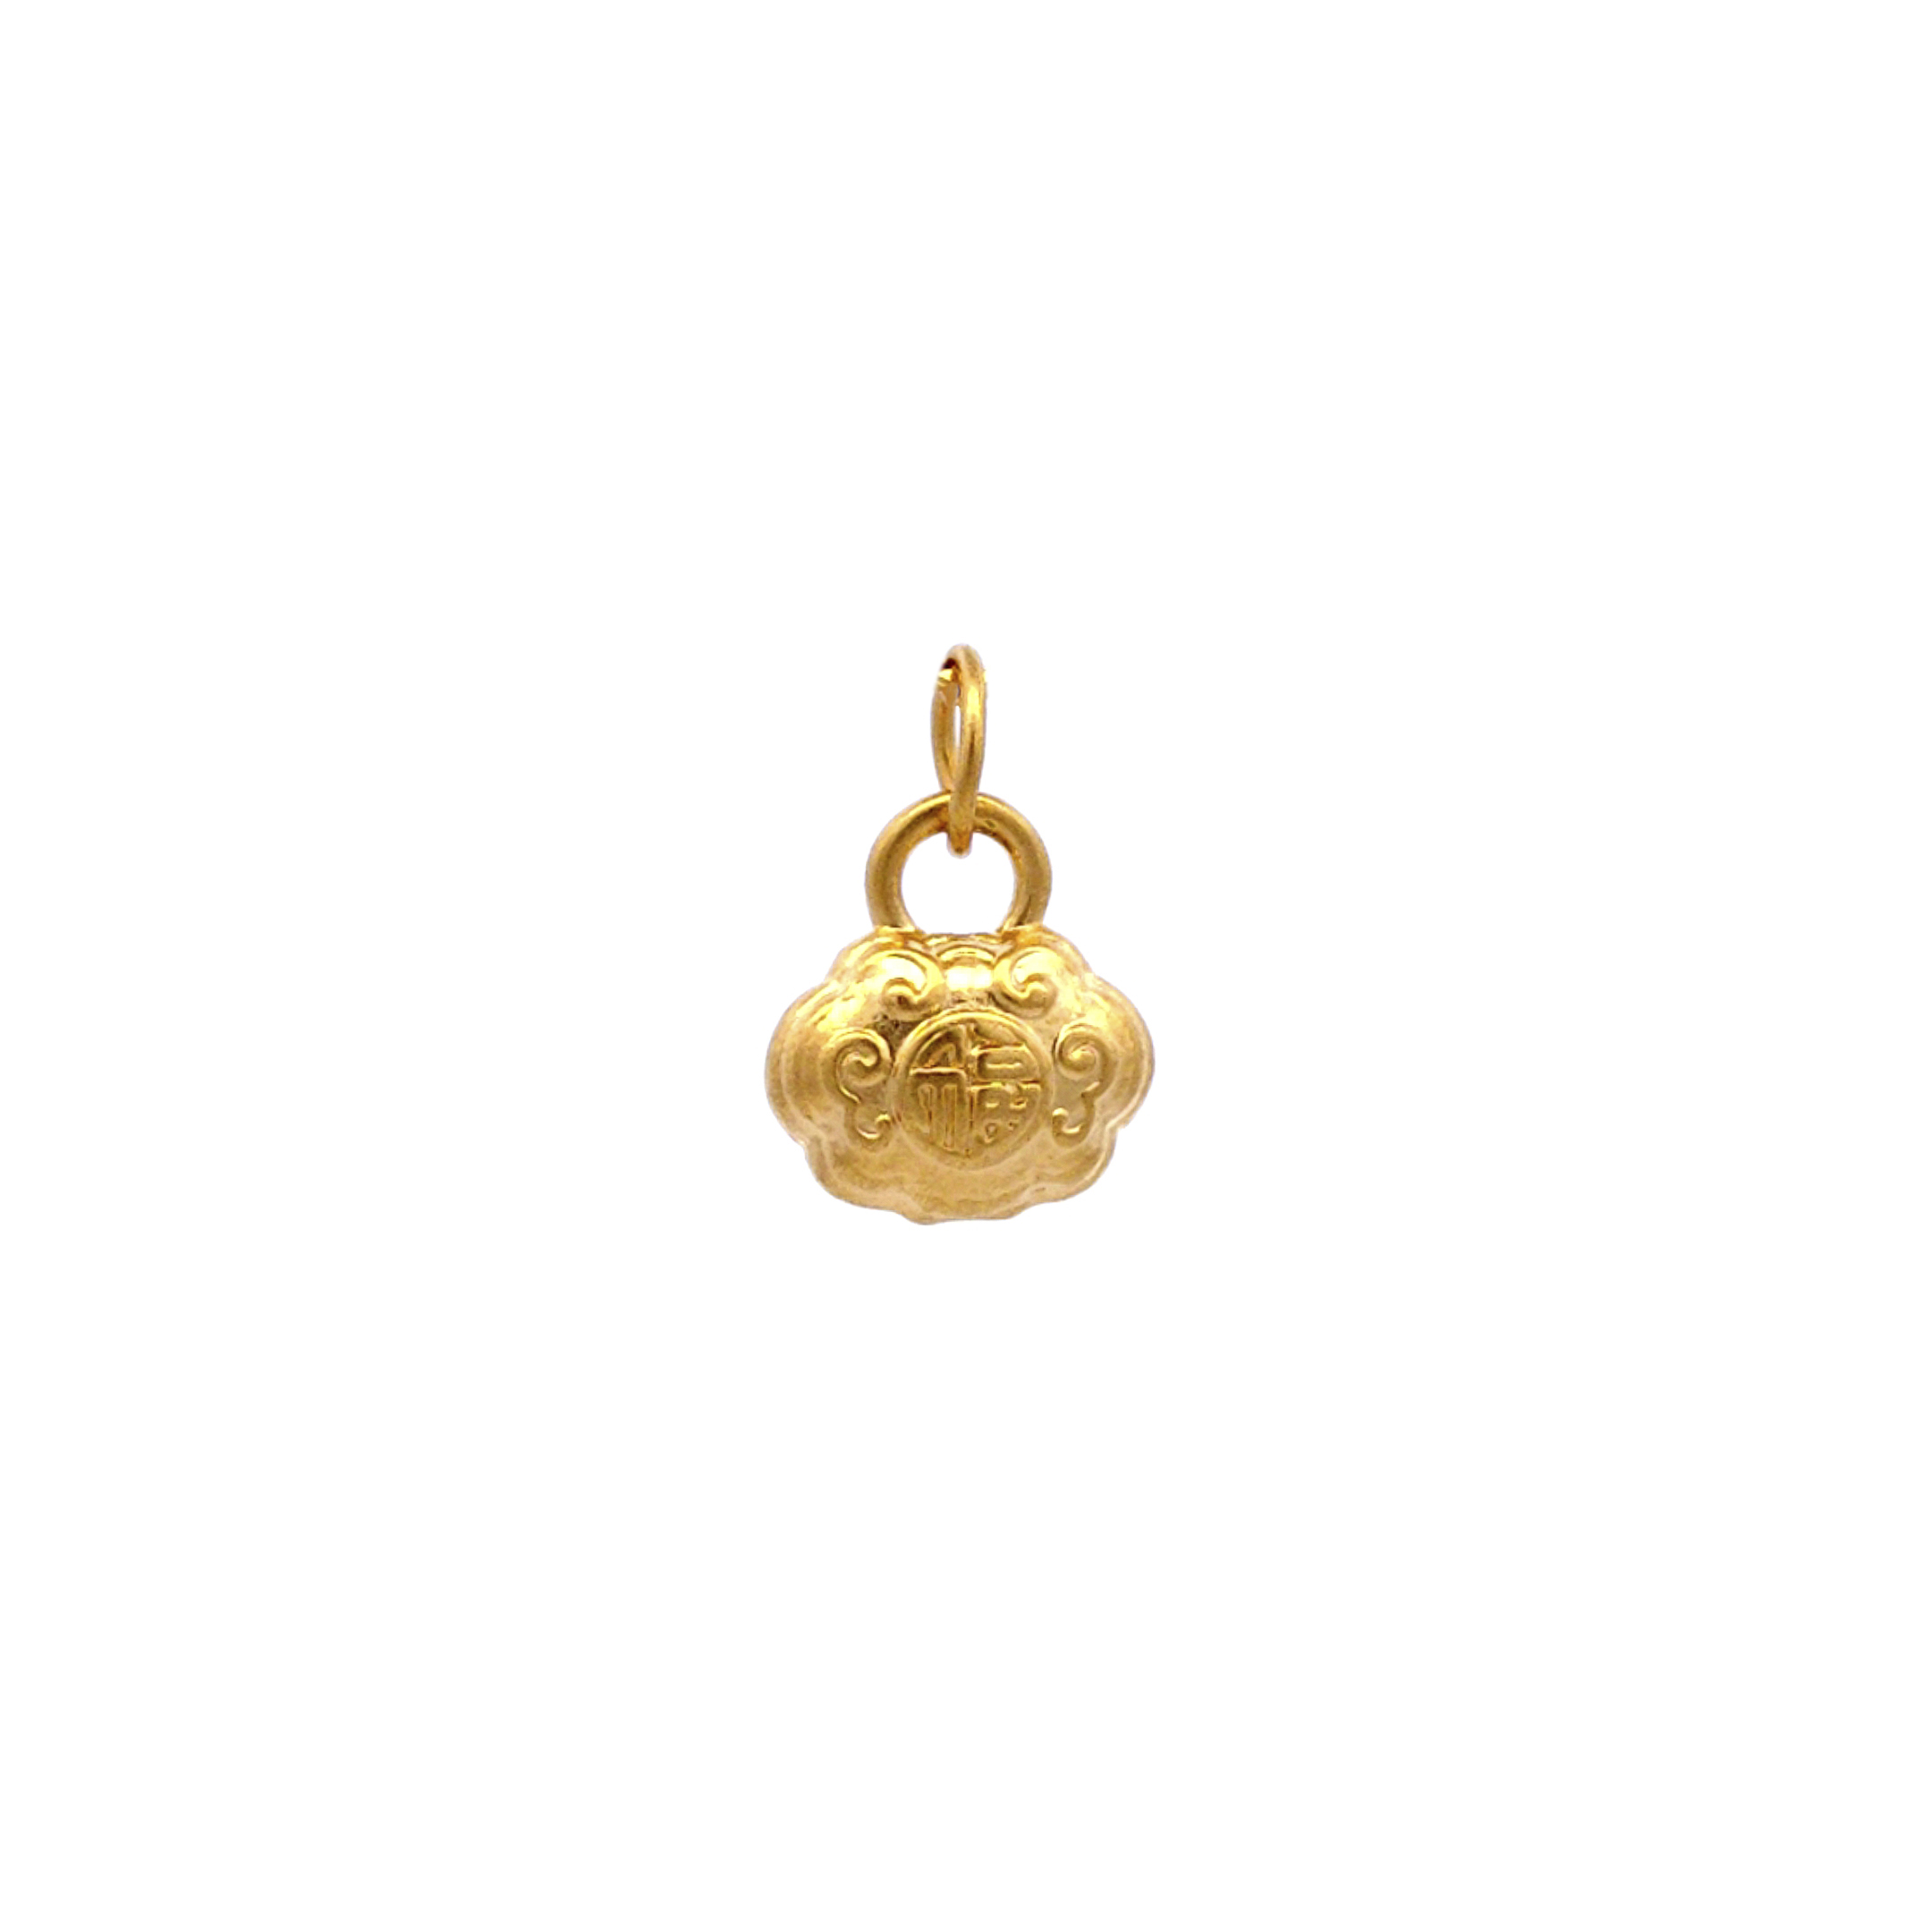 TIANSI 999 (24K) Gold Fortune Longevity Lock Pendant